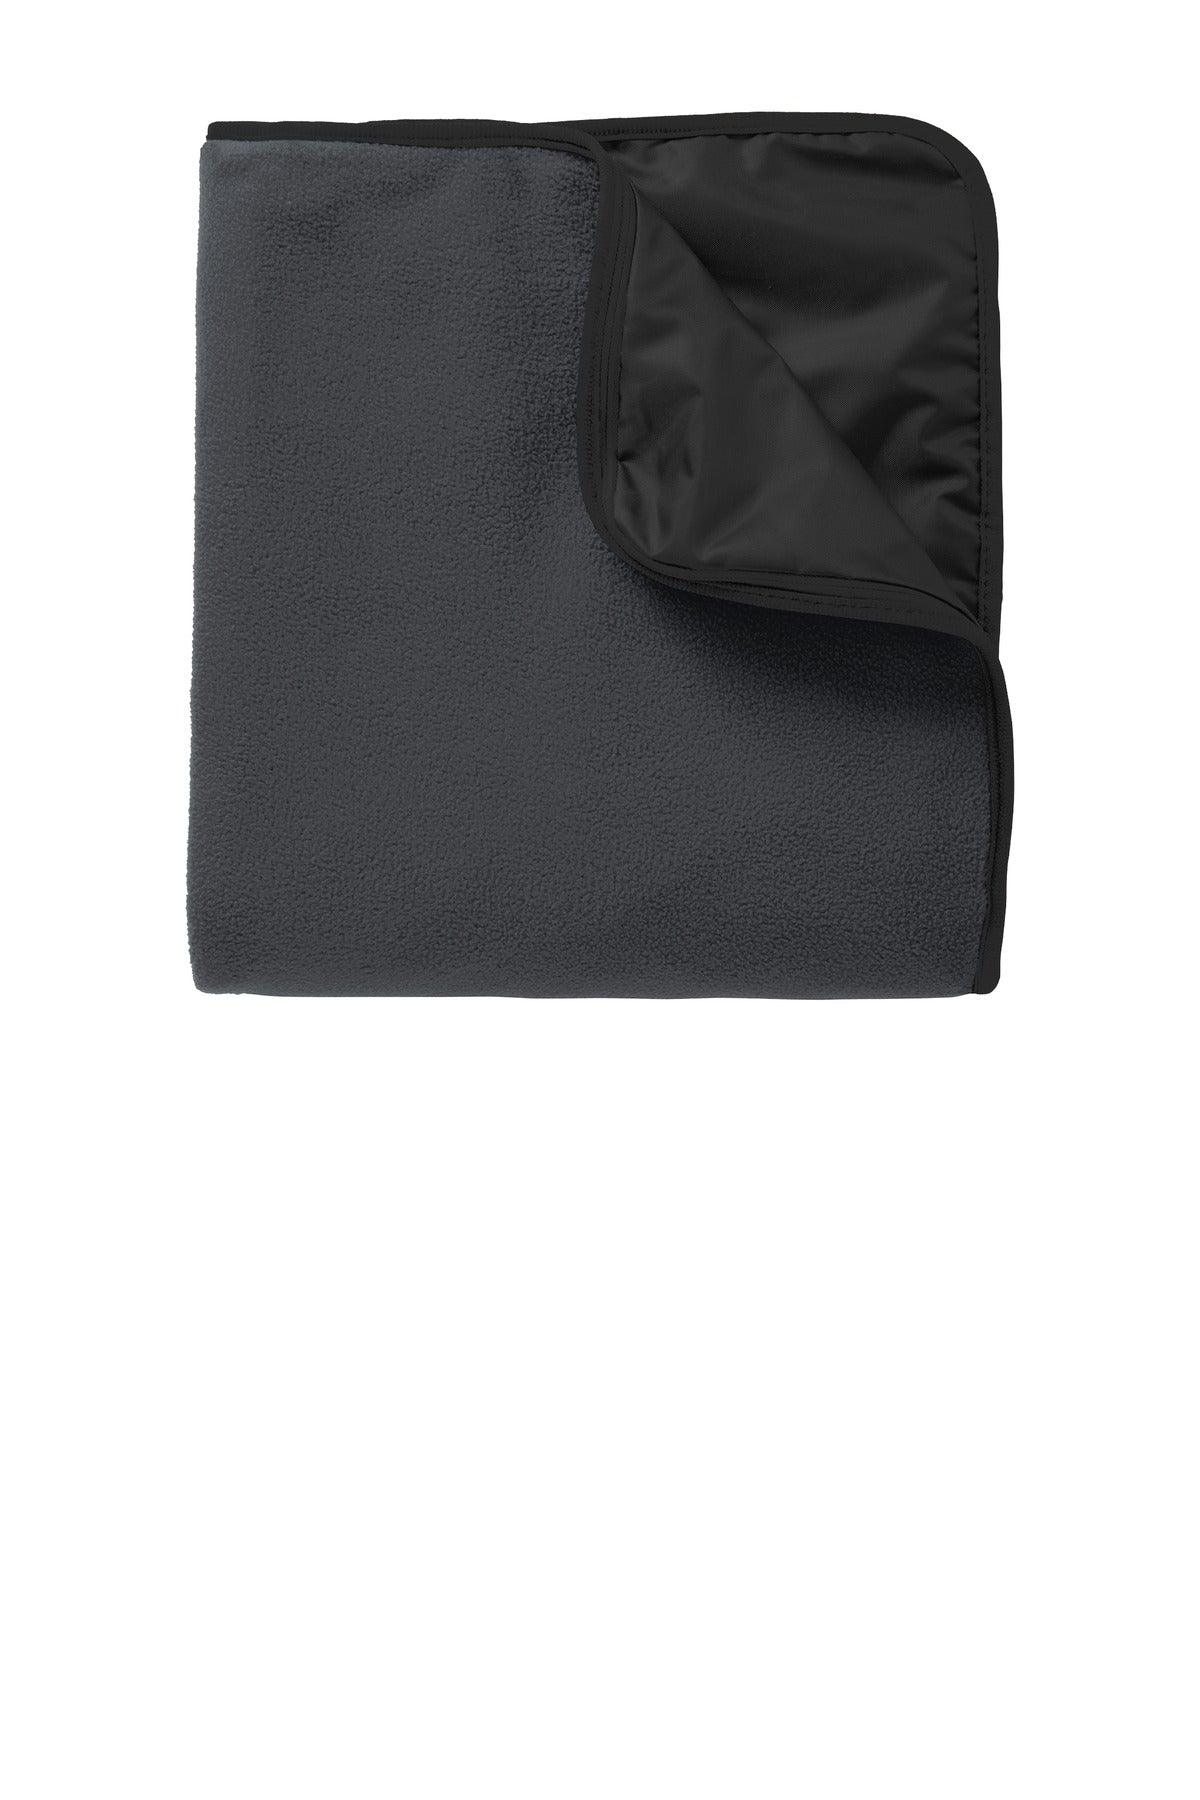 Port Authority Fleece & Poly Travel Blanket. TB850 - Dresses Max